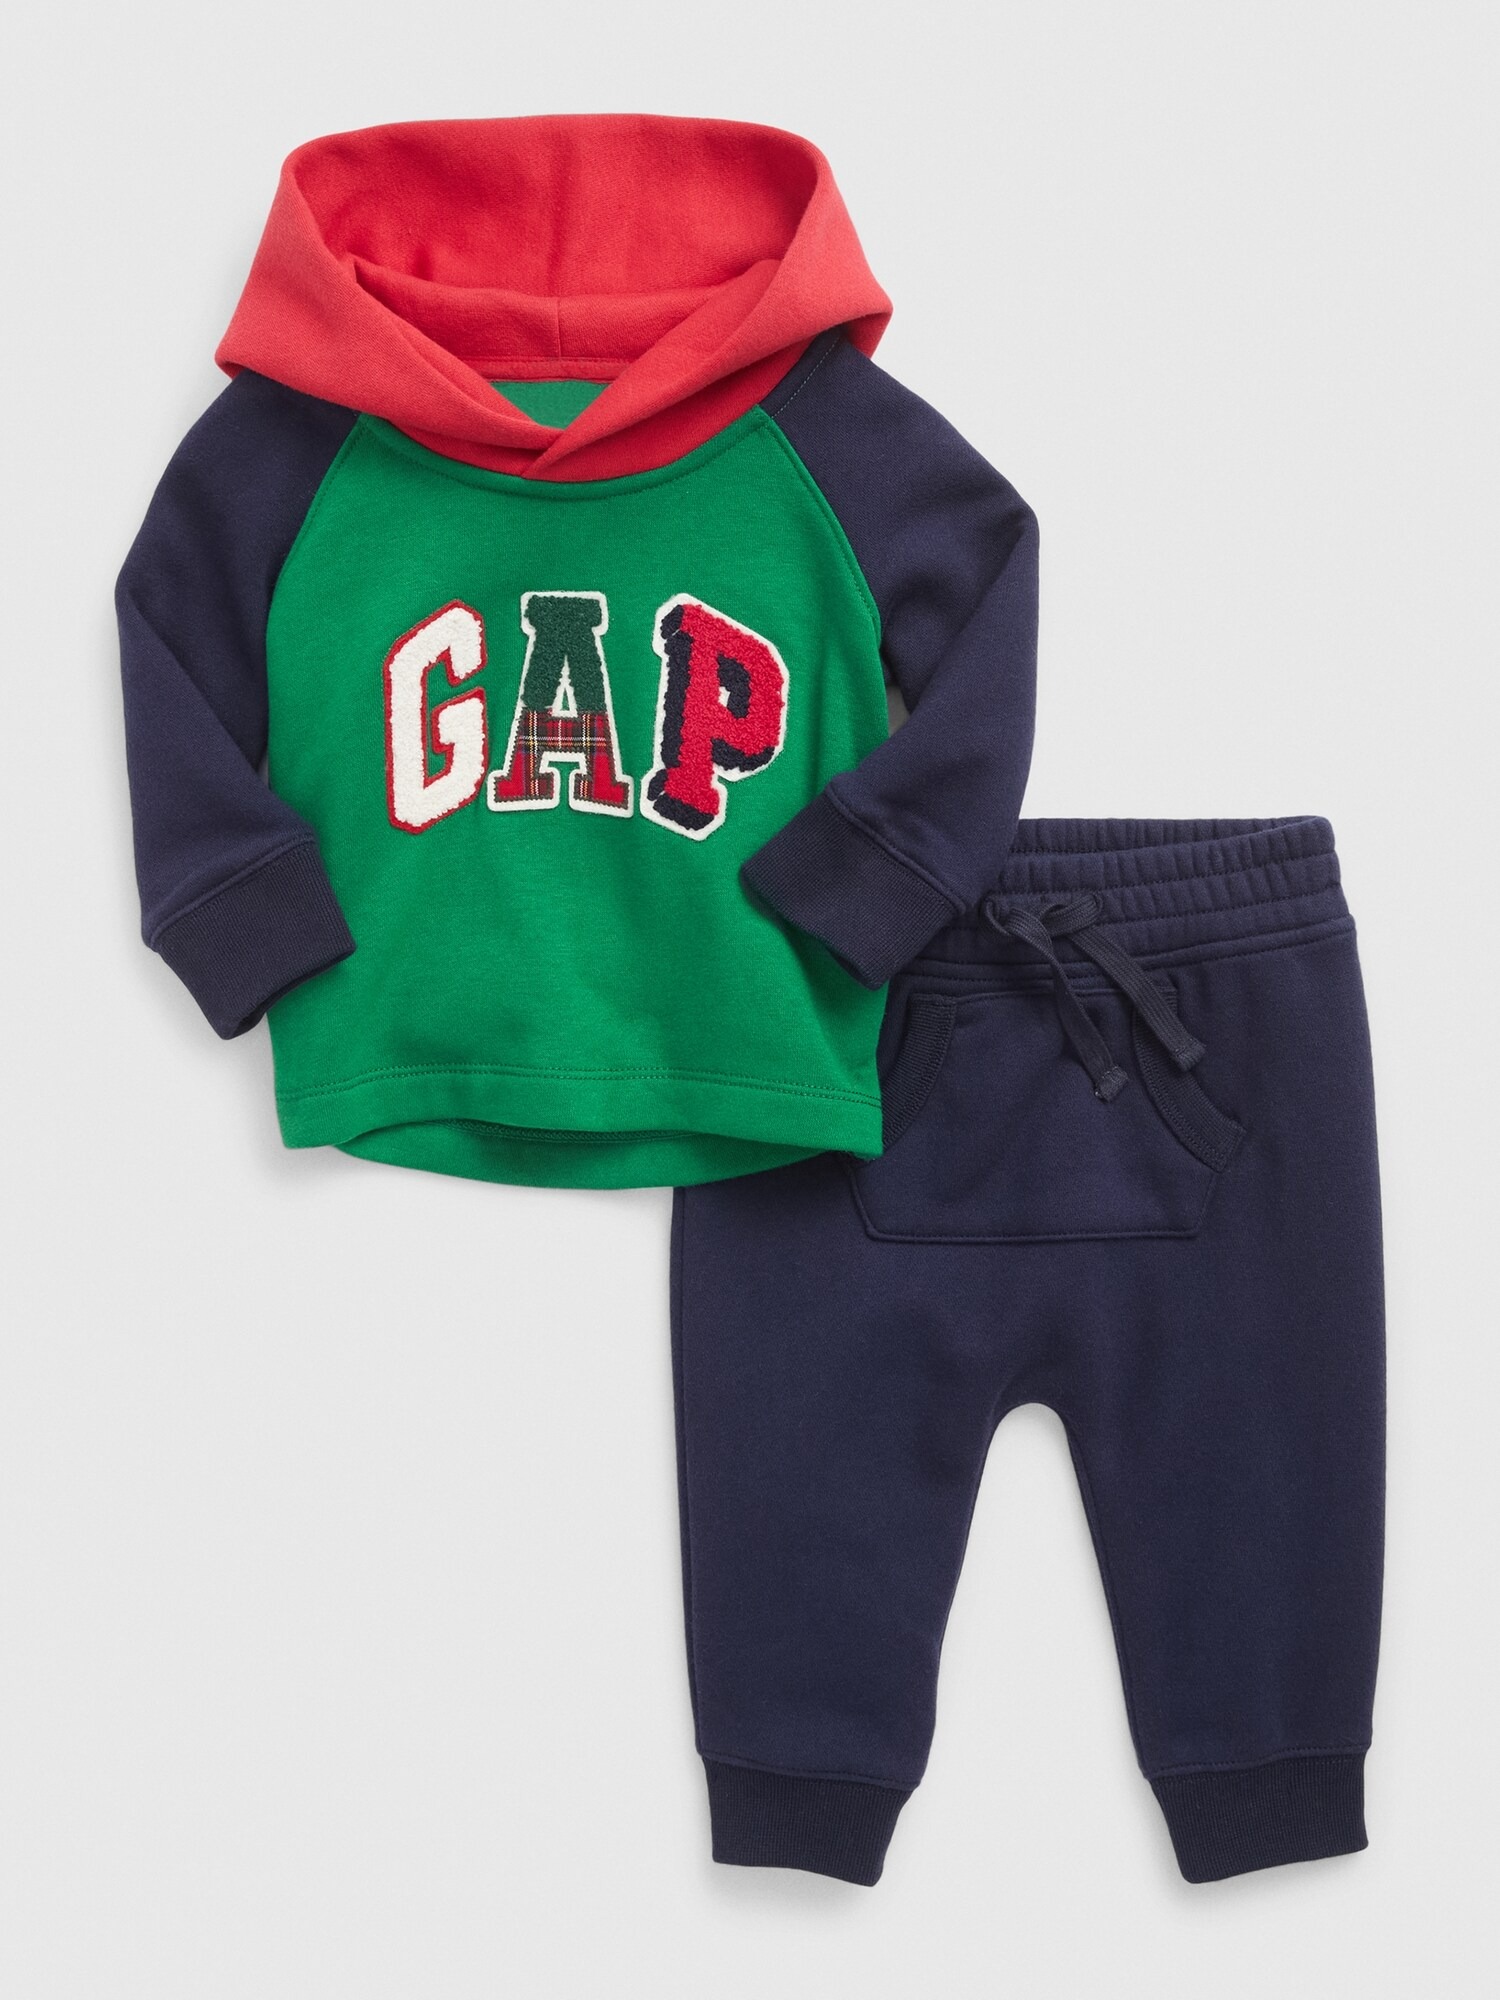 Gap Colorblock Sweatshirt Outfit Set. 1